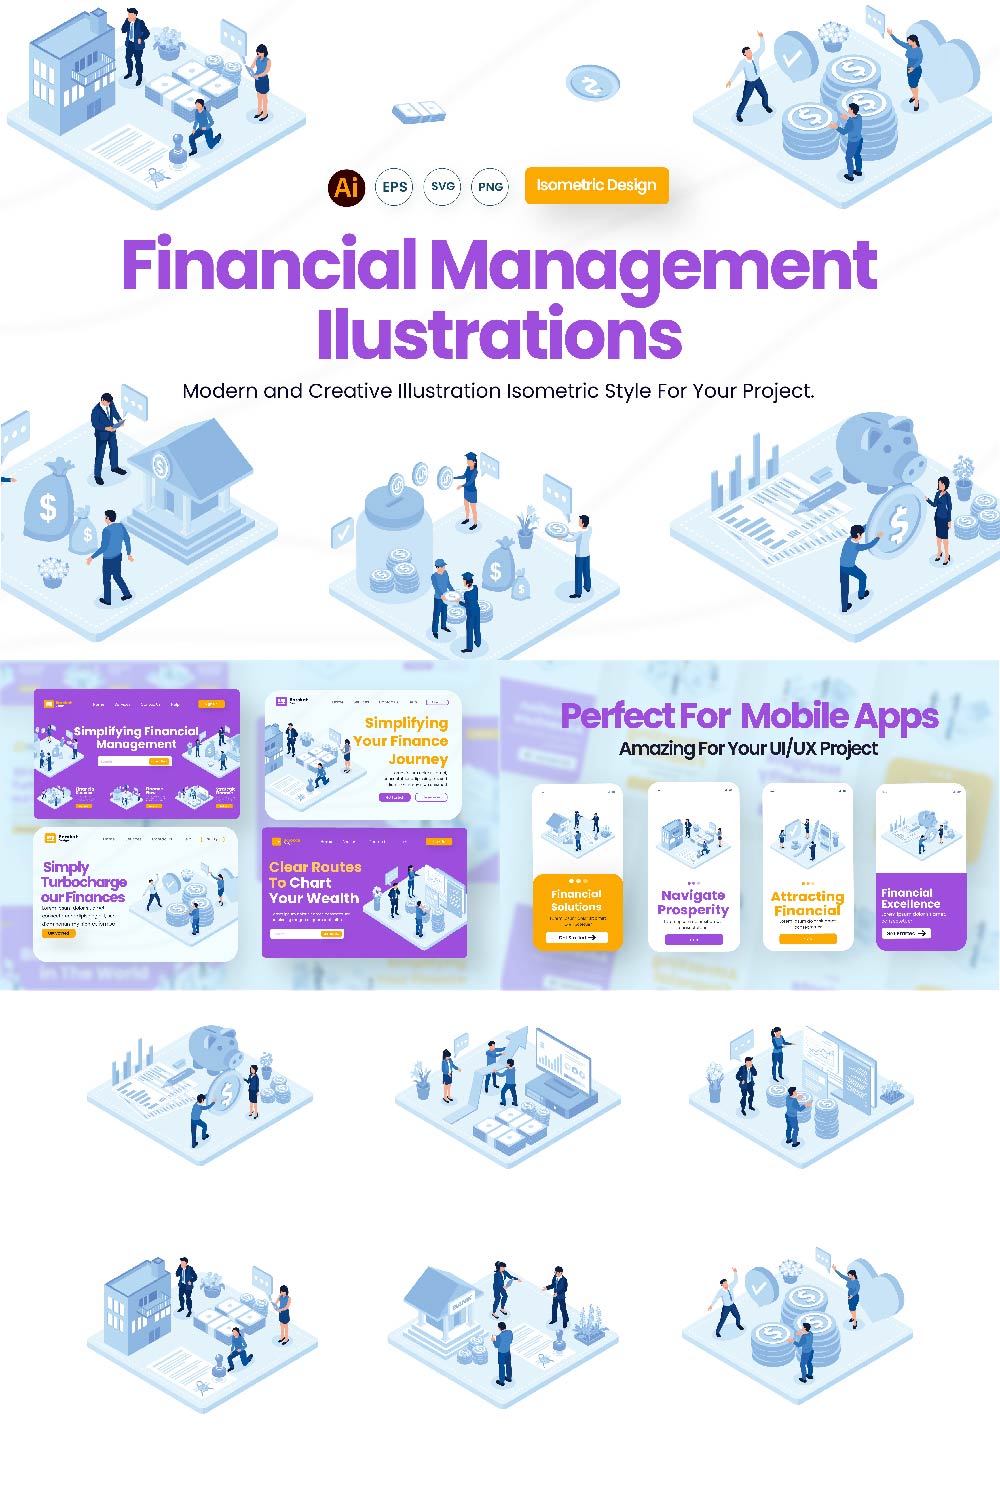 Financial Management Illustration Design pinterest preview image.